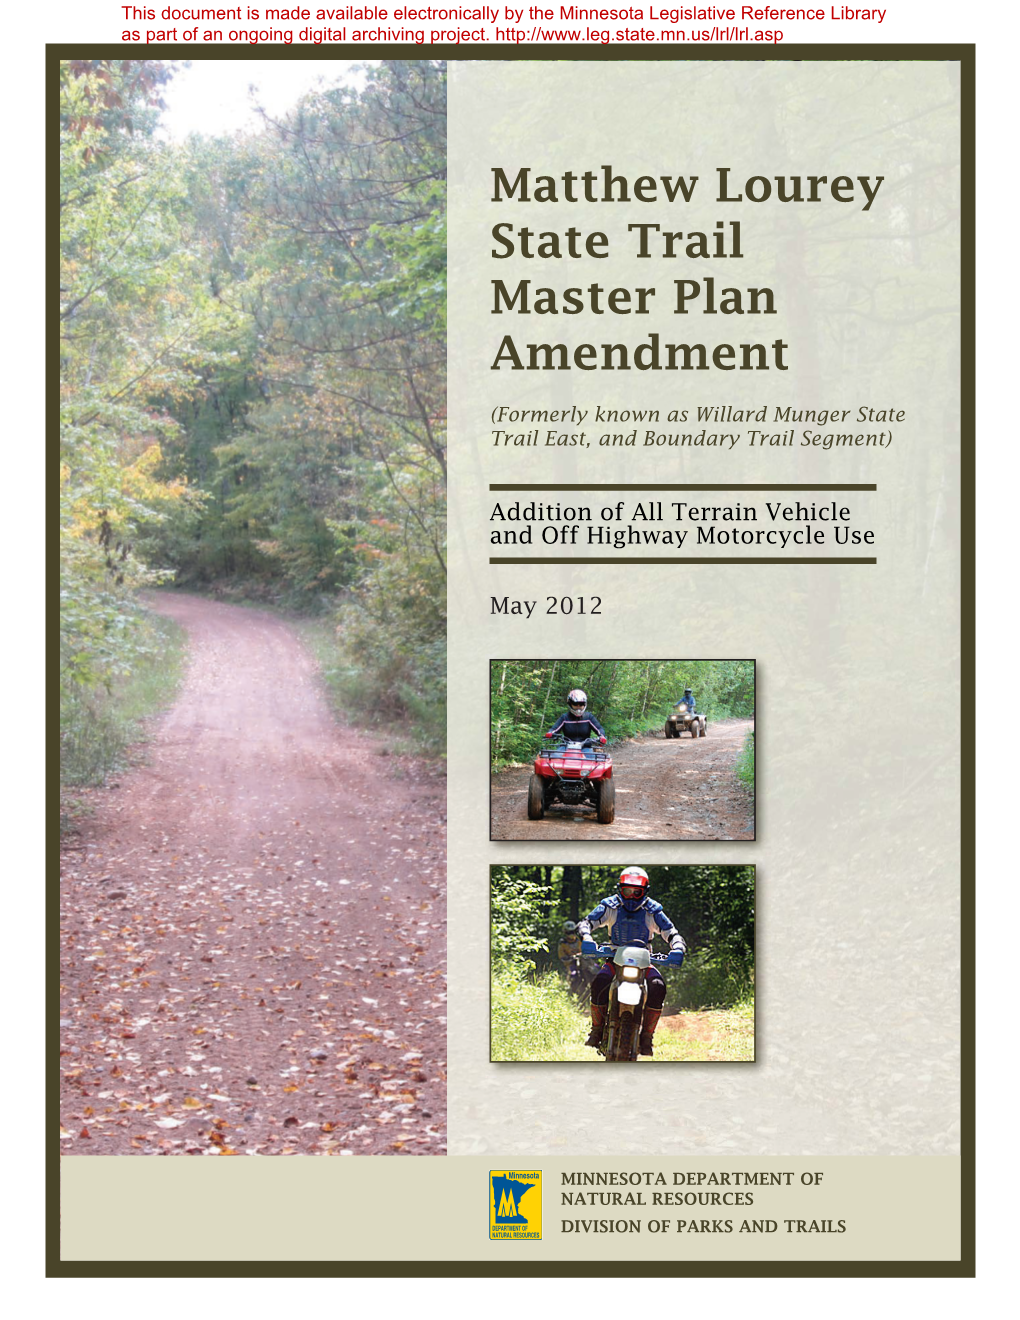 Matthew Lourey State Trail Master Plan Amendment